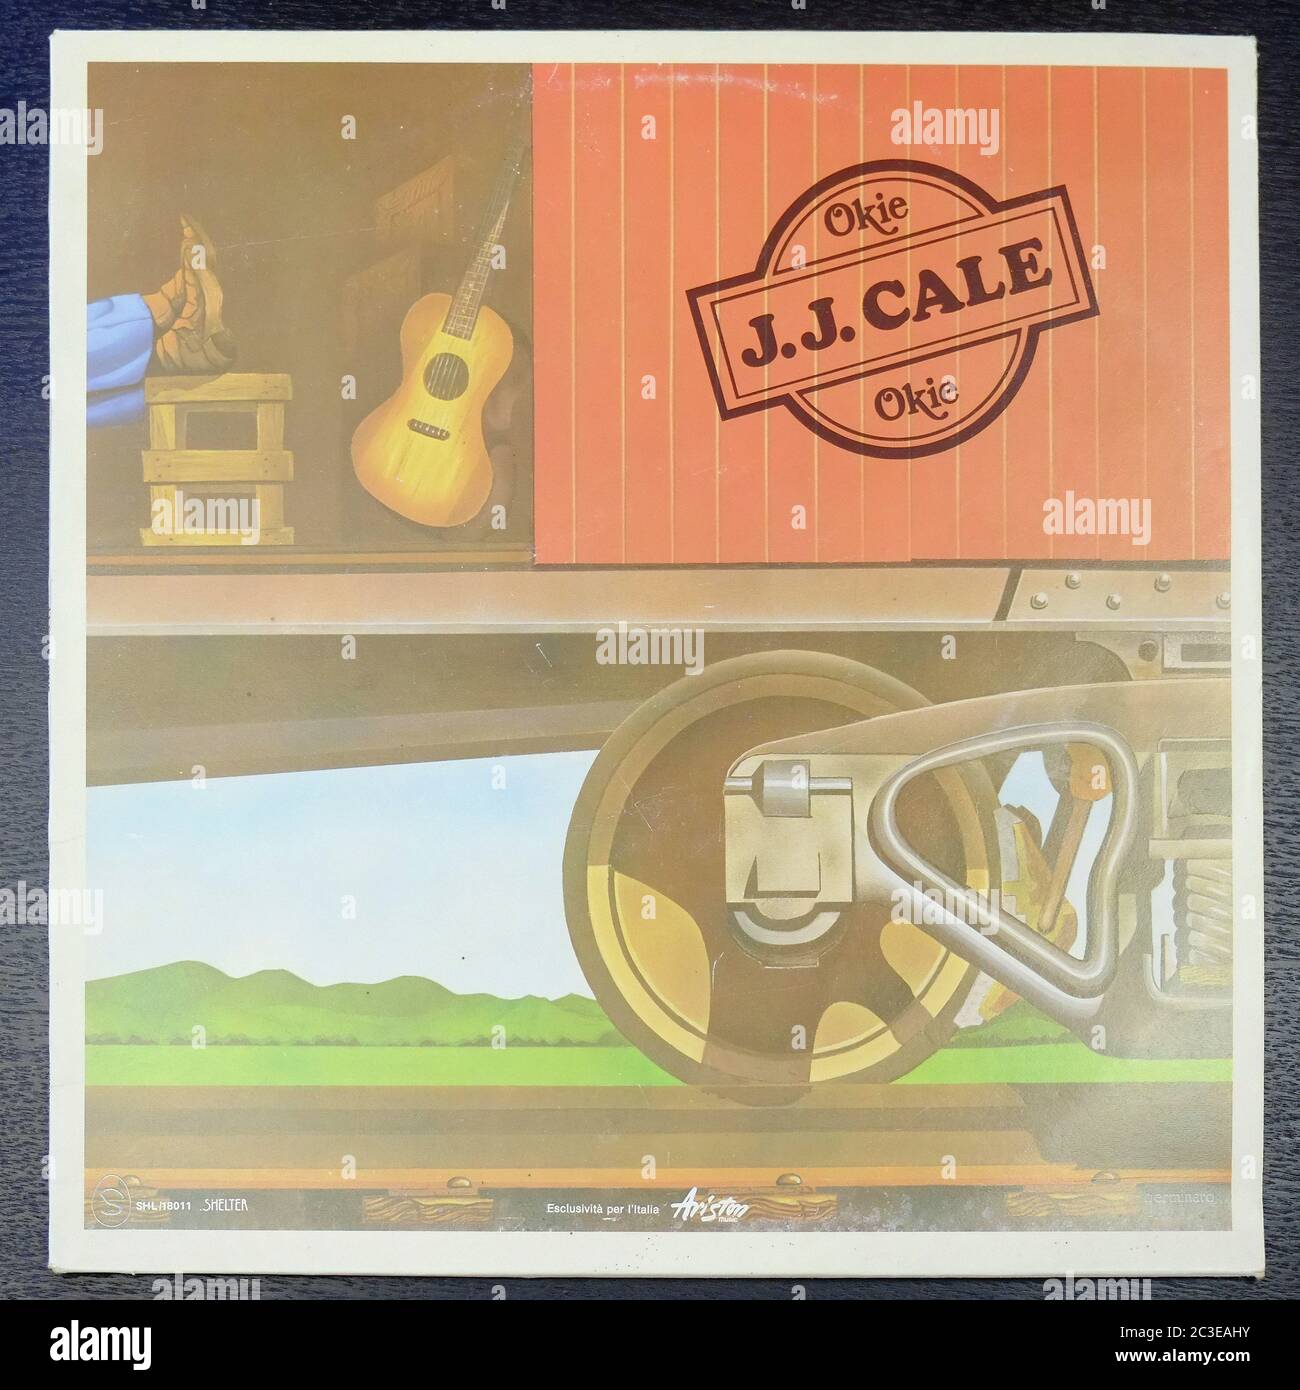 J.J. Cale Okie  - Vintage 12'' vinyl LP Cover Stock Photo